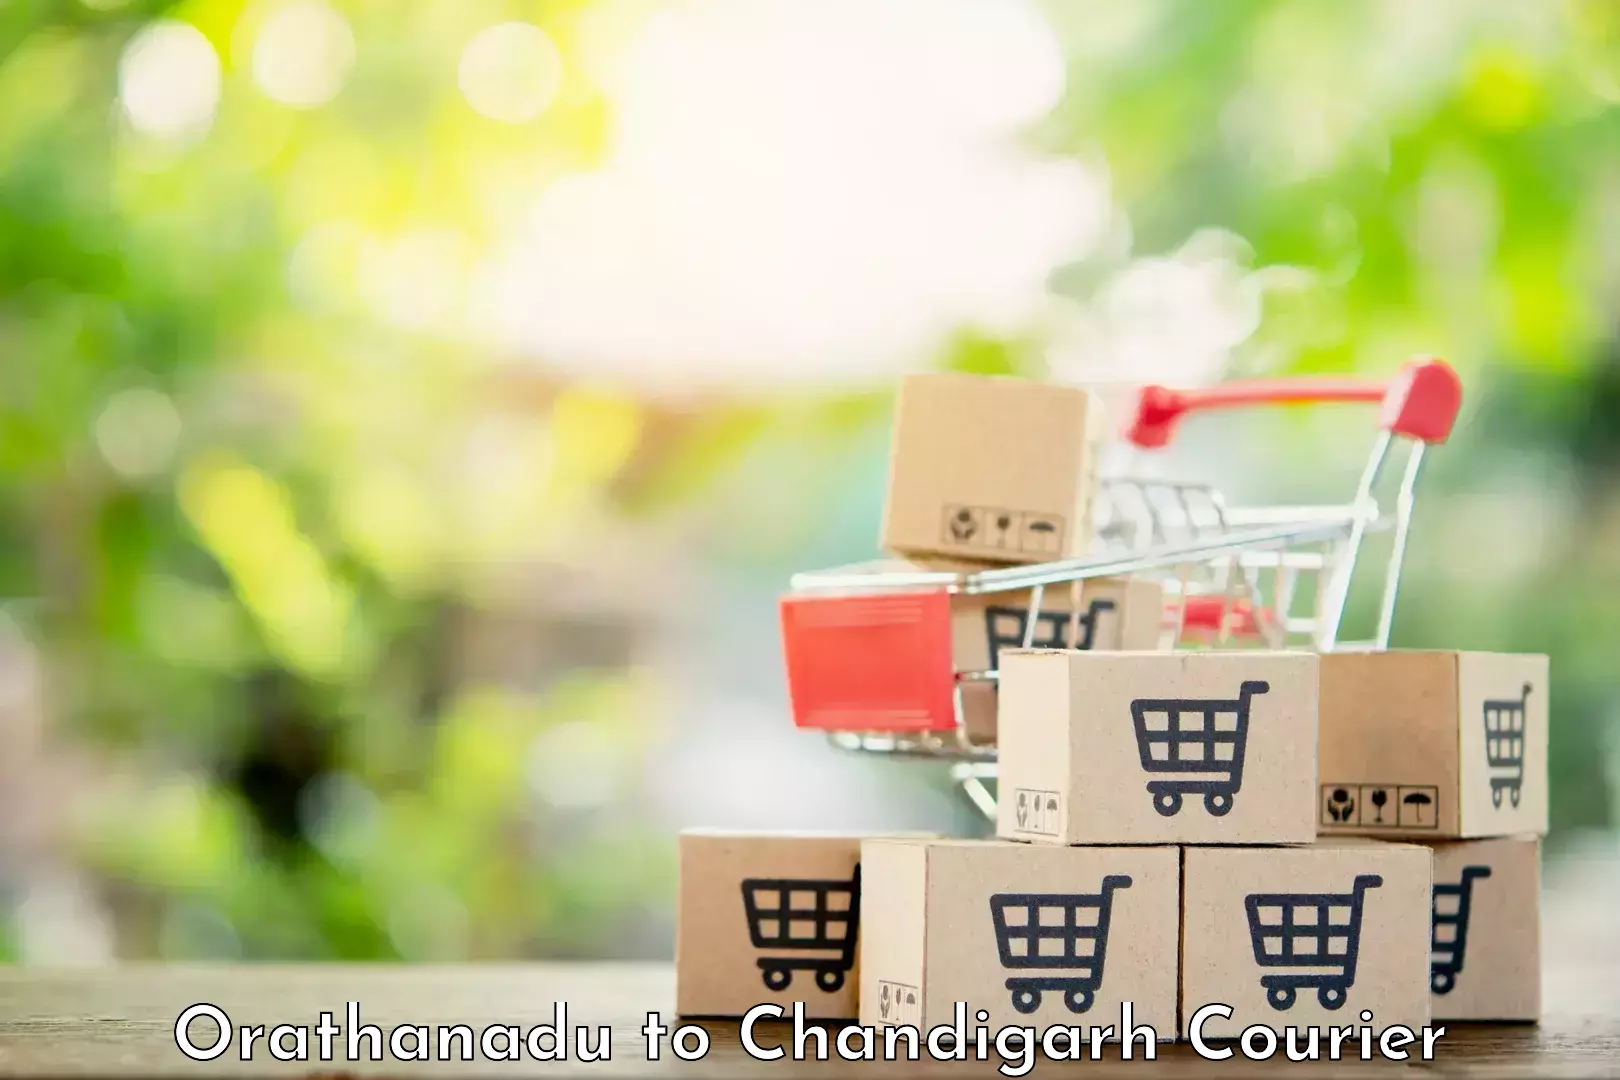 Next-day delivery options Orathanadu to Chandigarh